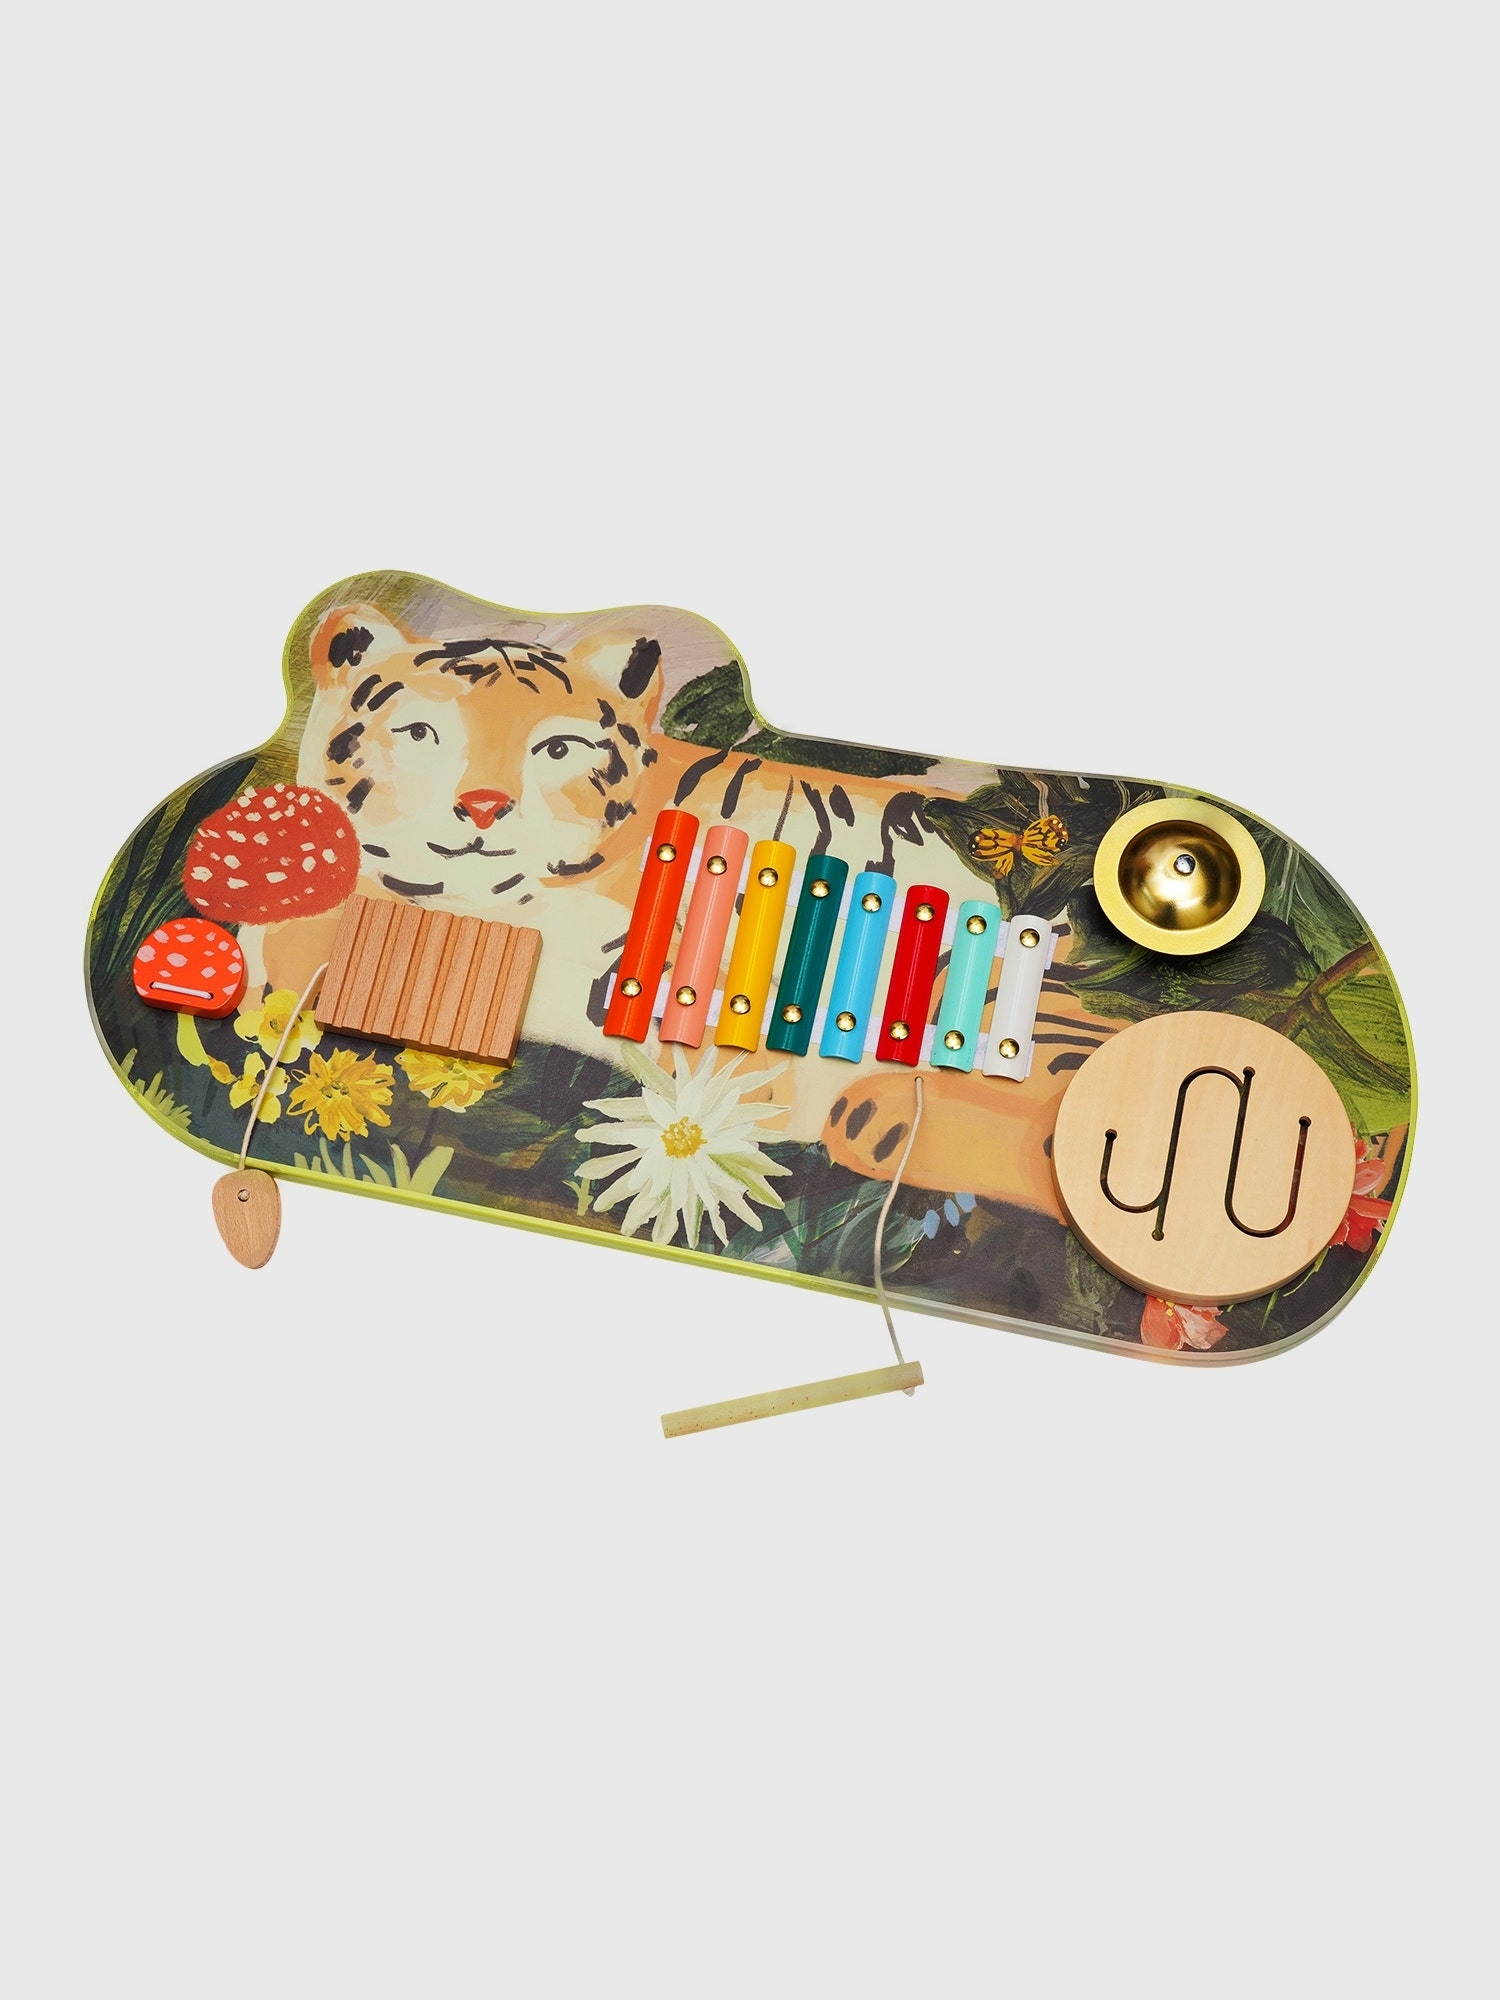 Gap Tiger Tunes Wooden Toddler Musical Toy Instrument